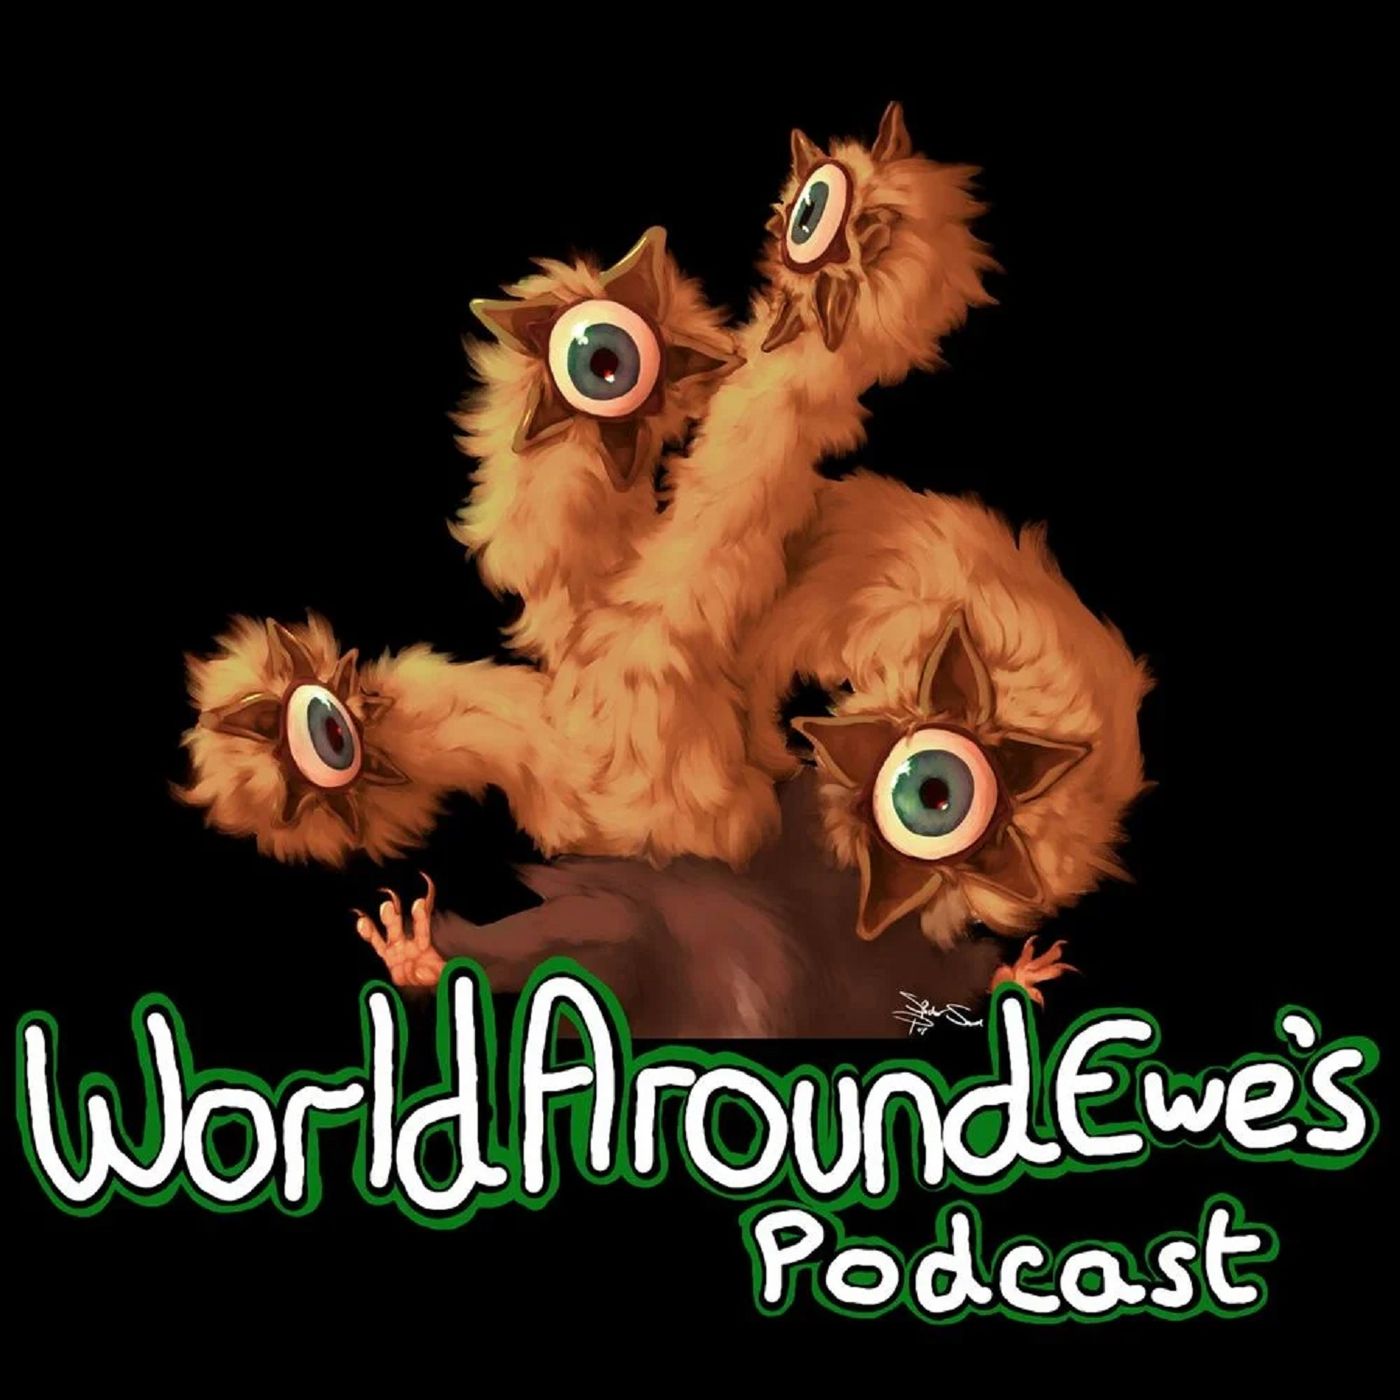 The Graspy Flitcher by WorldAroundEwe's Podcast